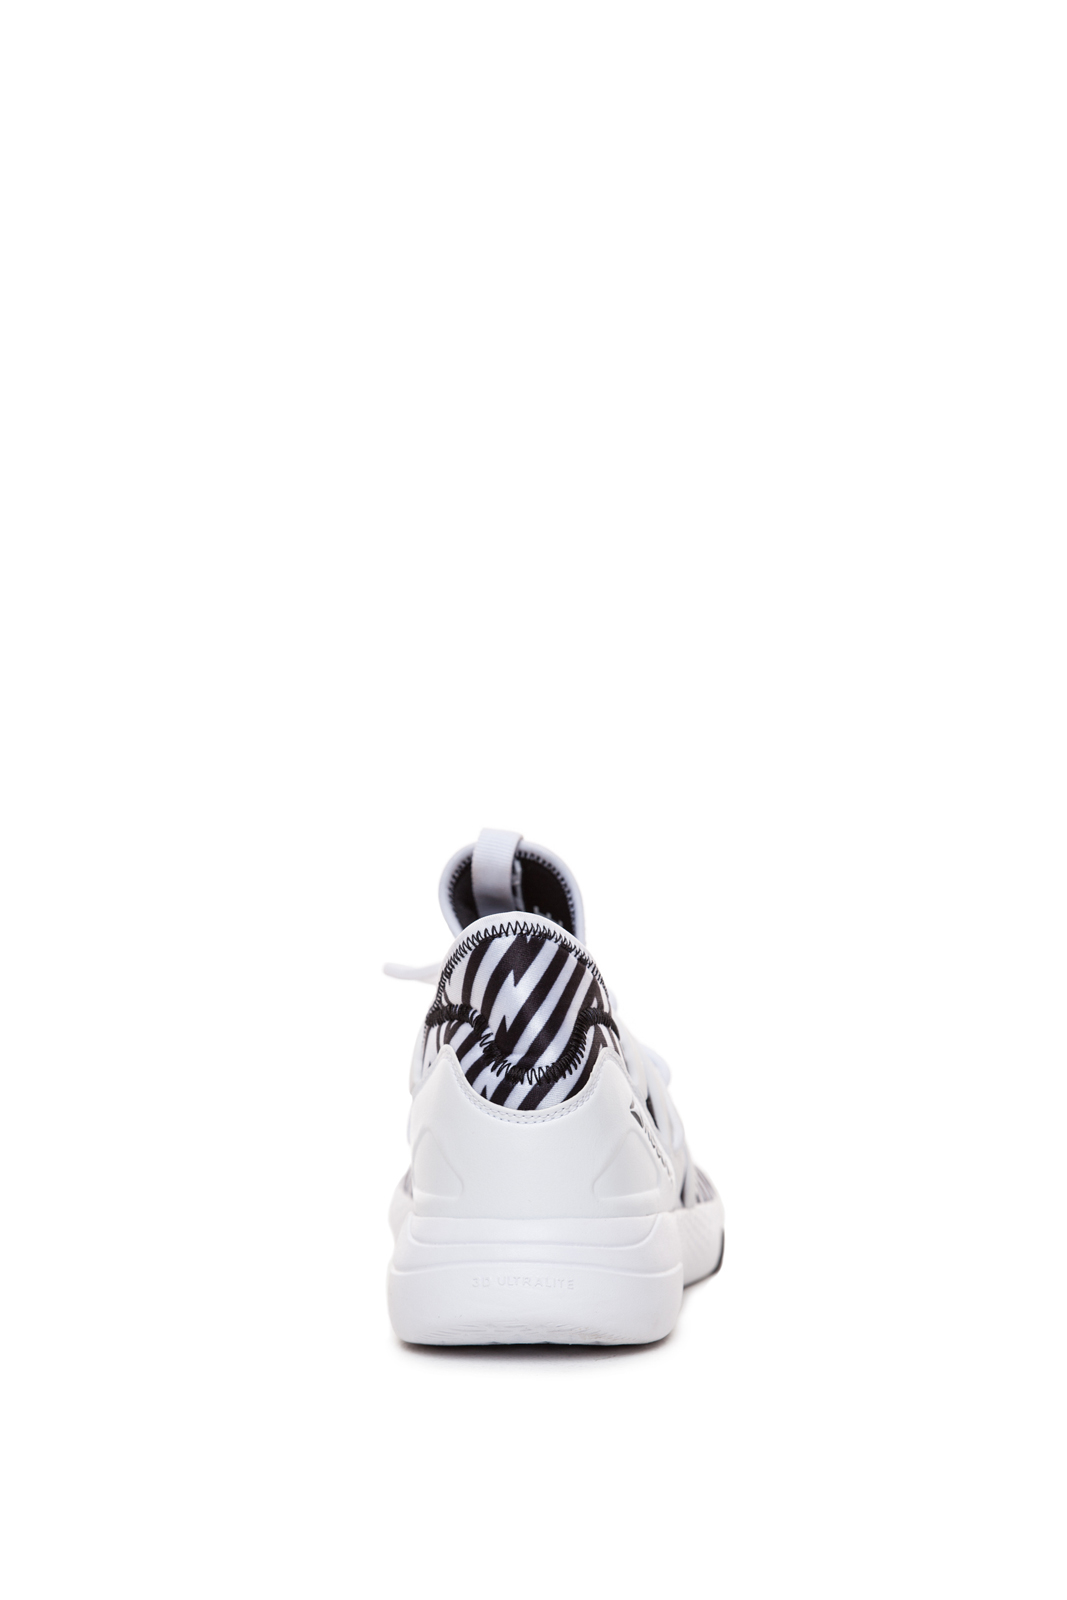 reebok-whiteblack-hayasu-sneaker-white-product-0-913775677-normal.jpeg